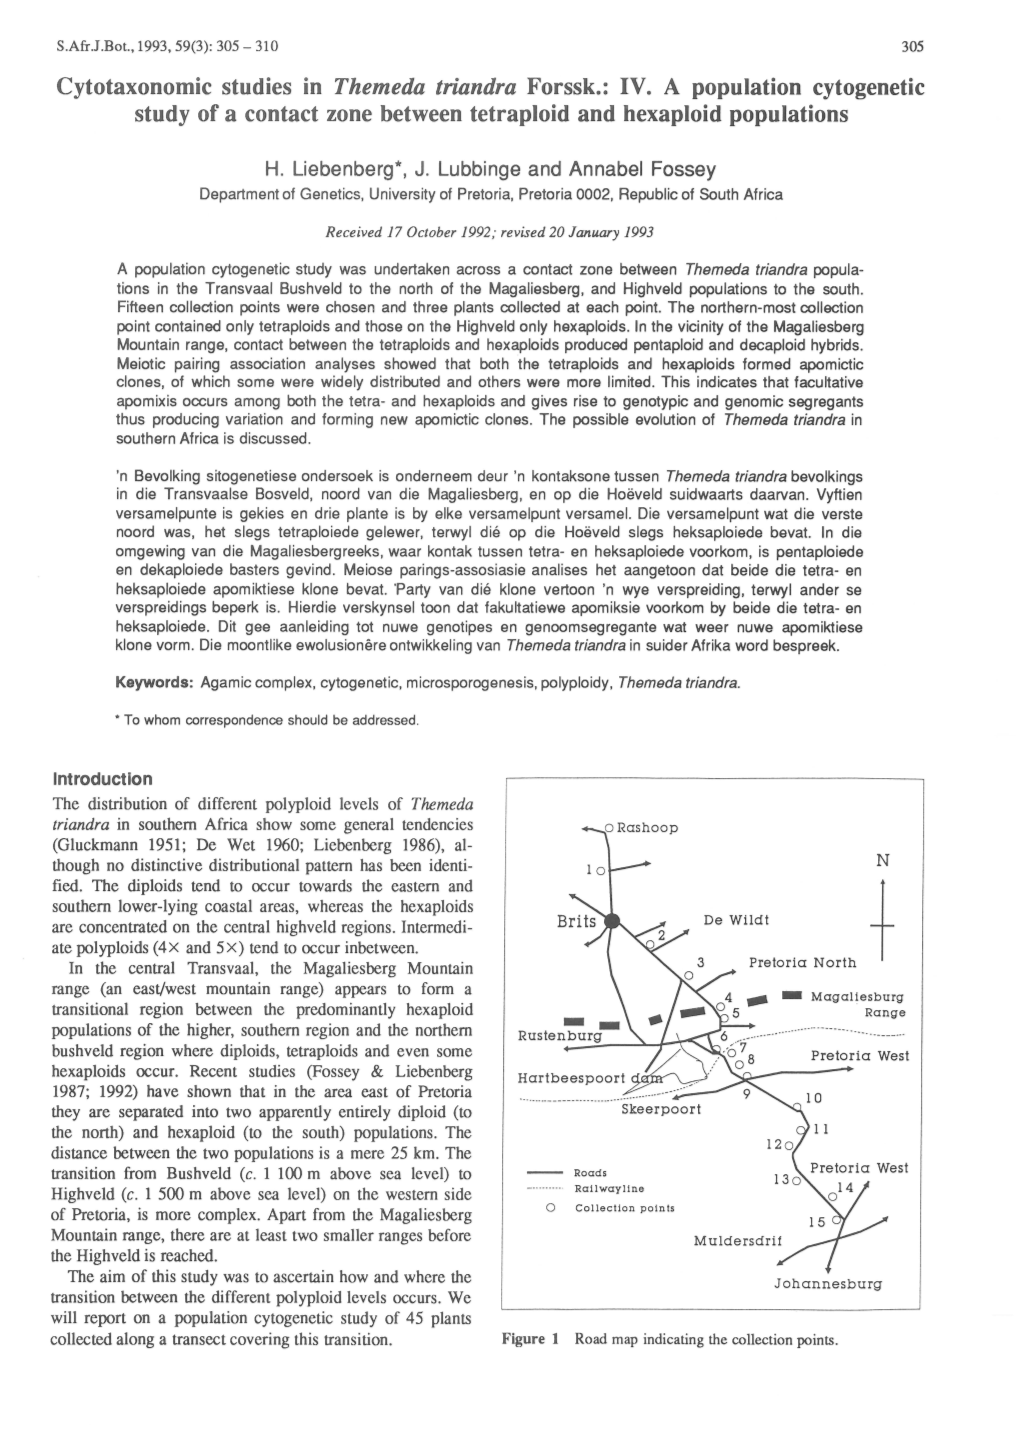 Cytotaxonomic Studies in Themeda Triandra Forssk.: IV